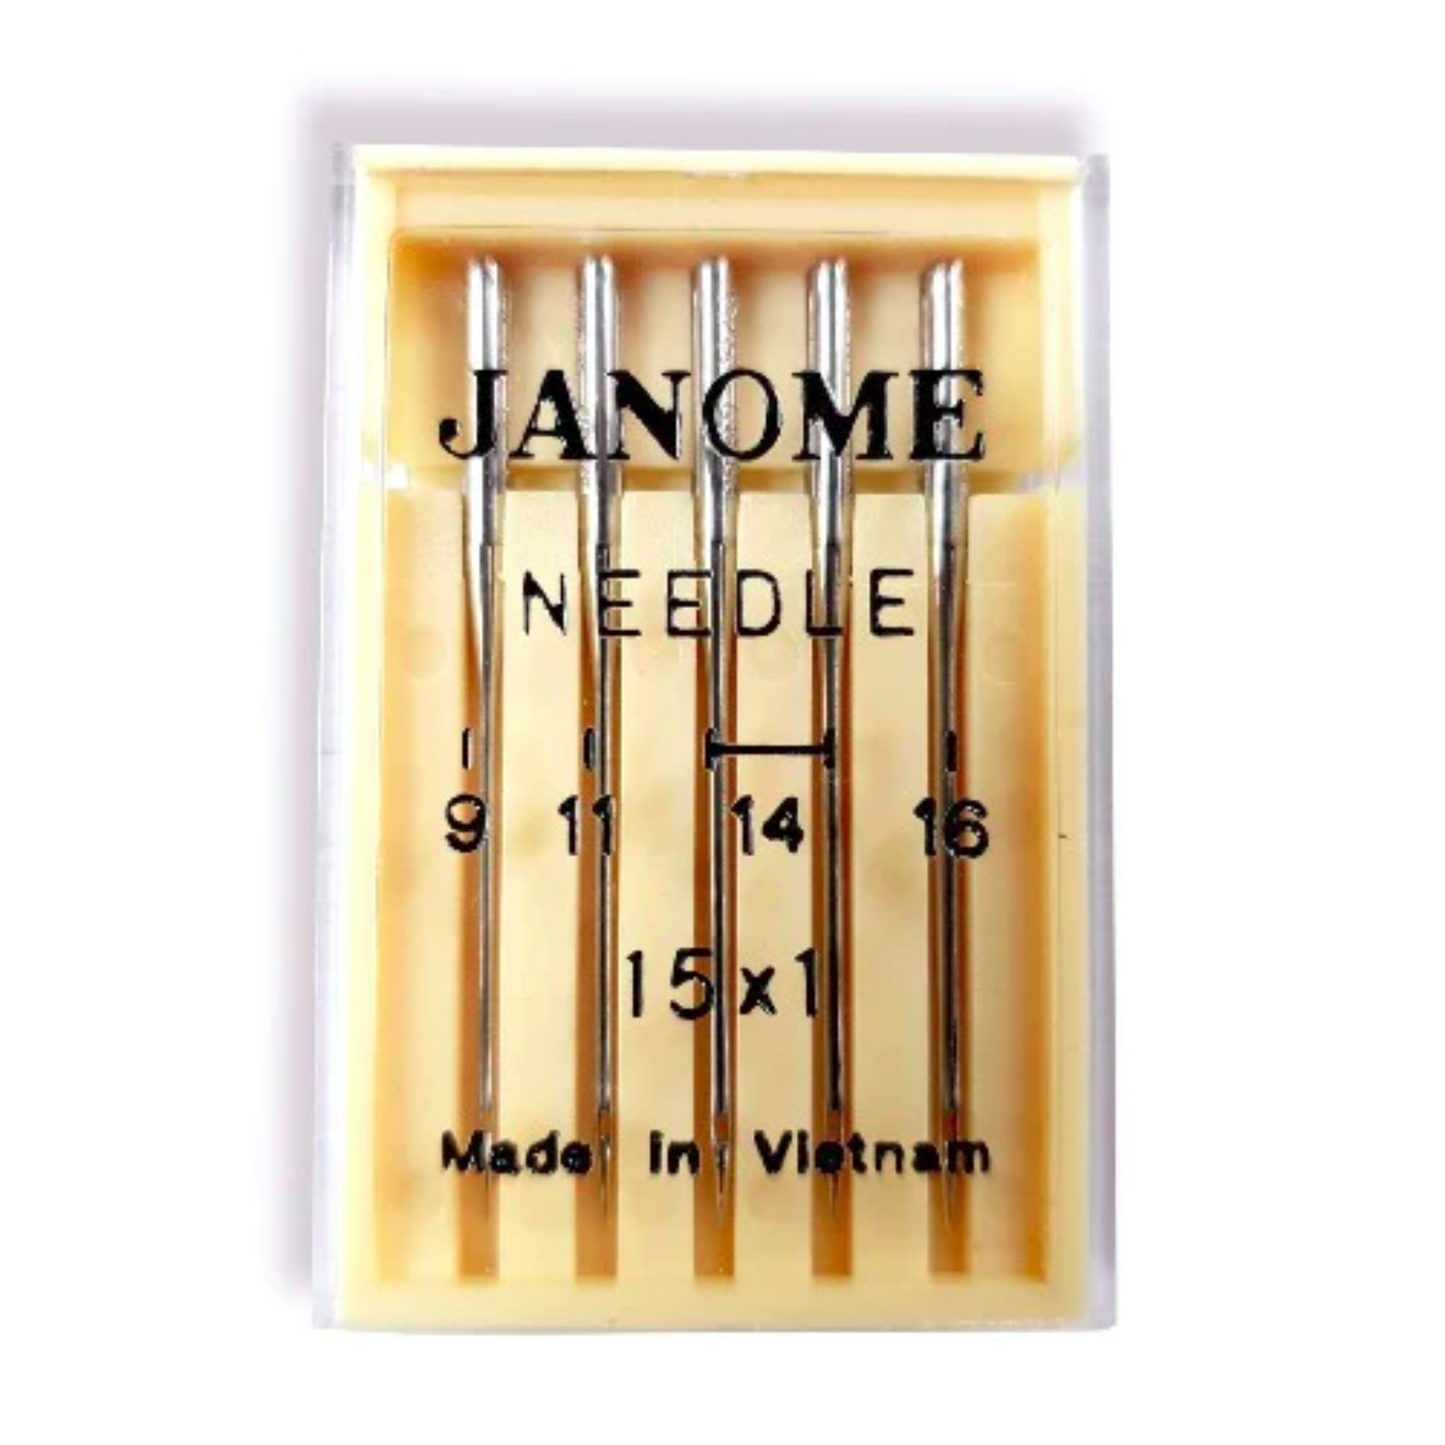 Janome - Sharp needles mixed - Silver - Packet